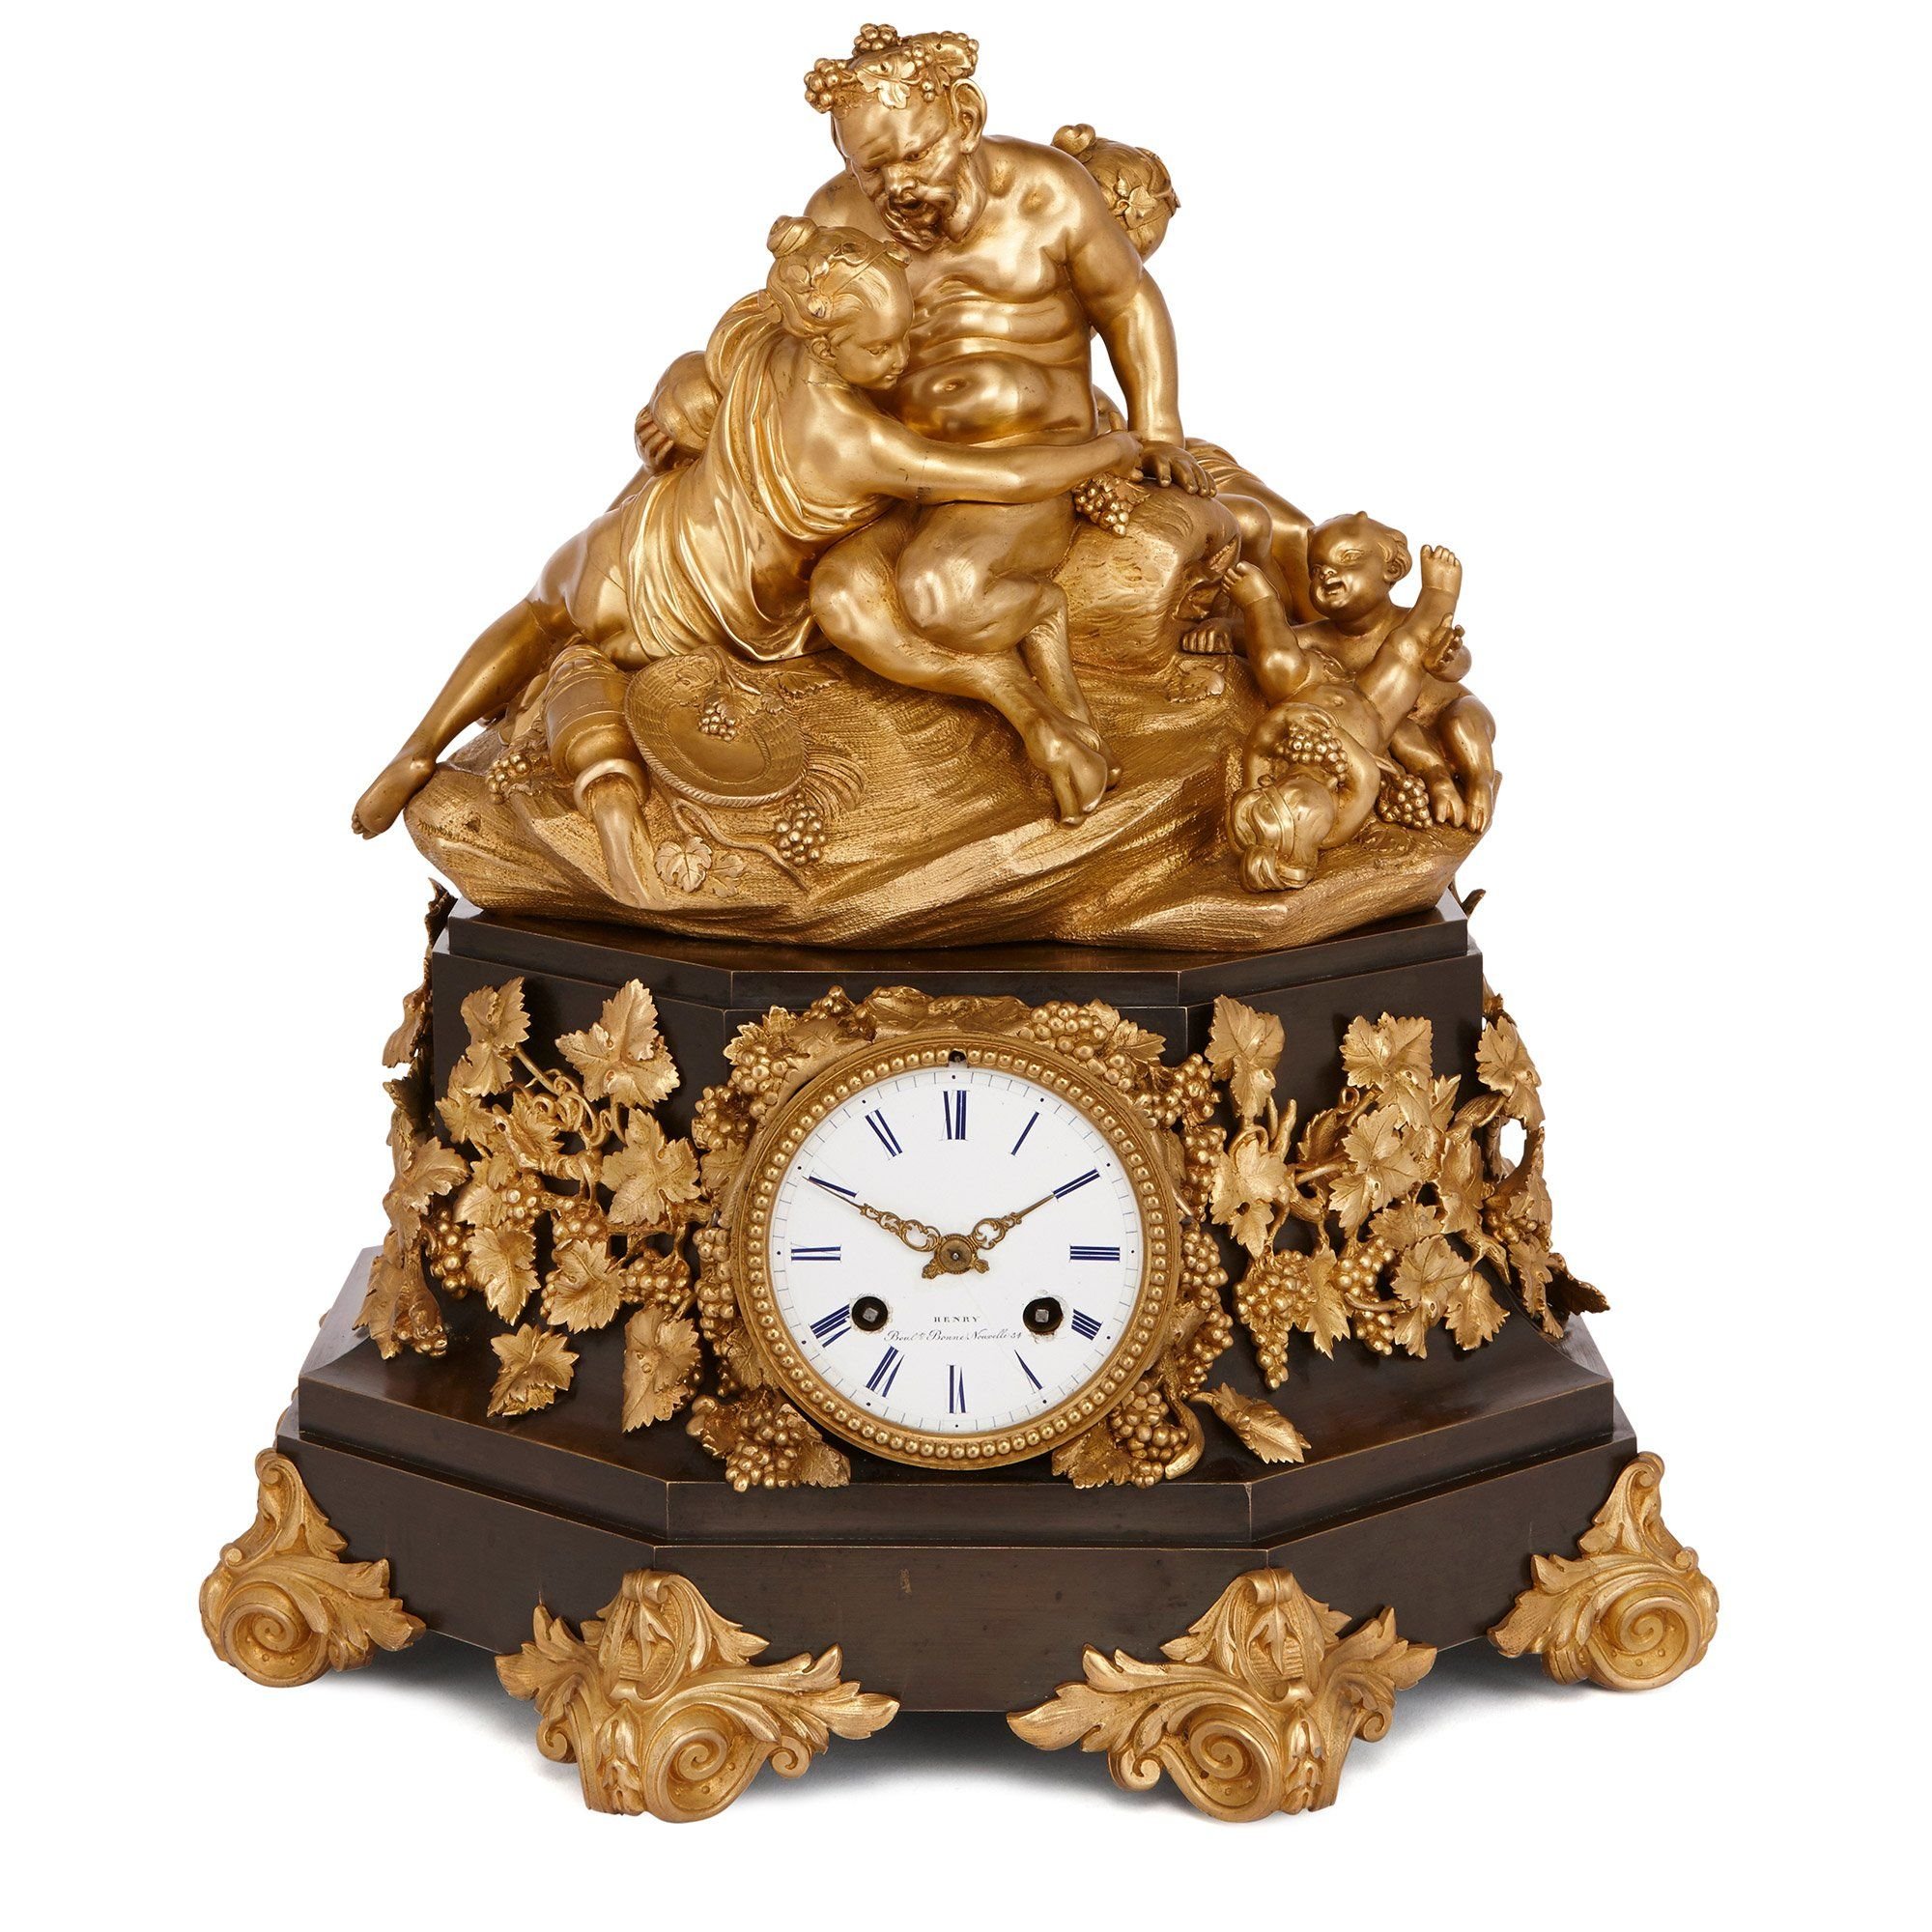 Mantel Clock 19 Century. Antique Mantel Clock. Mercury gilt Bronze Mantel Clock. Часы настольные 19 век. French hours